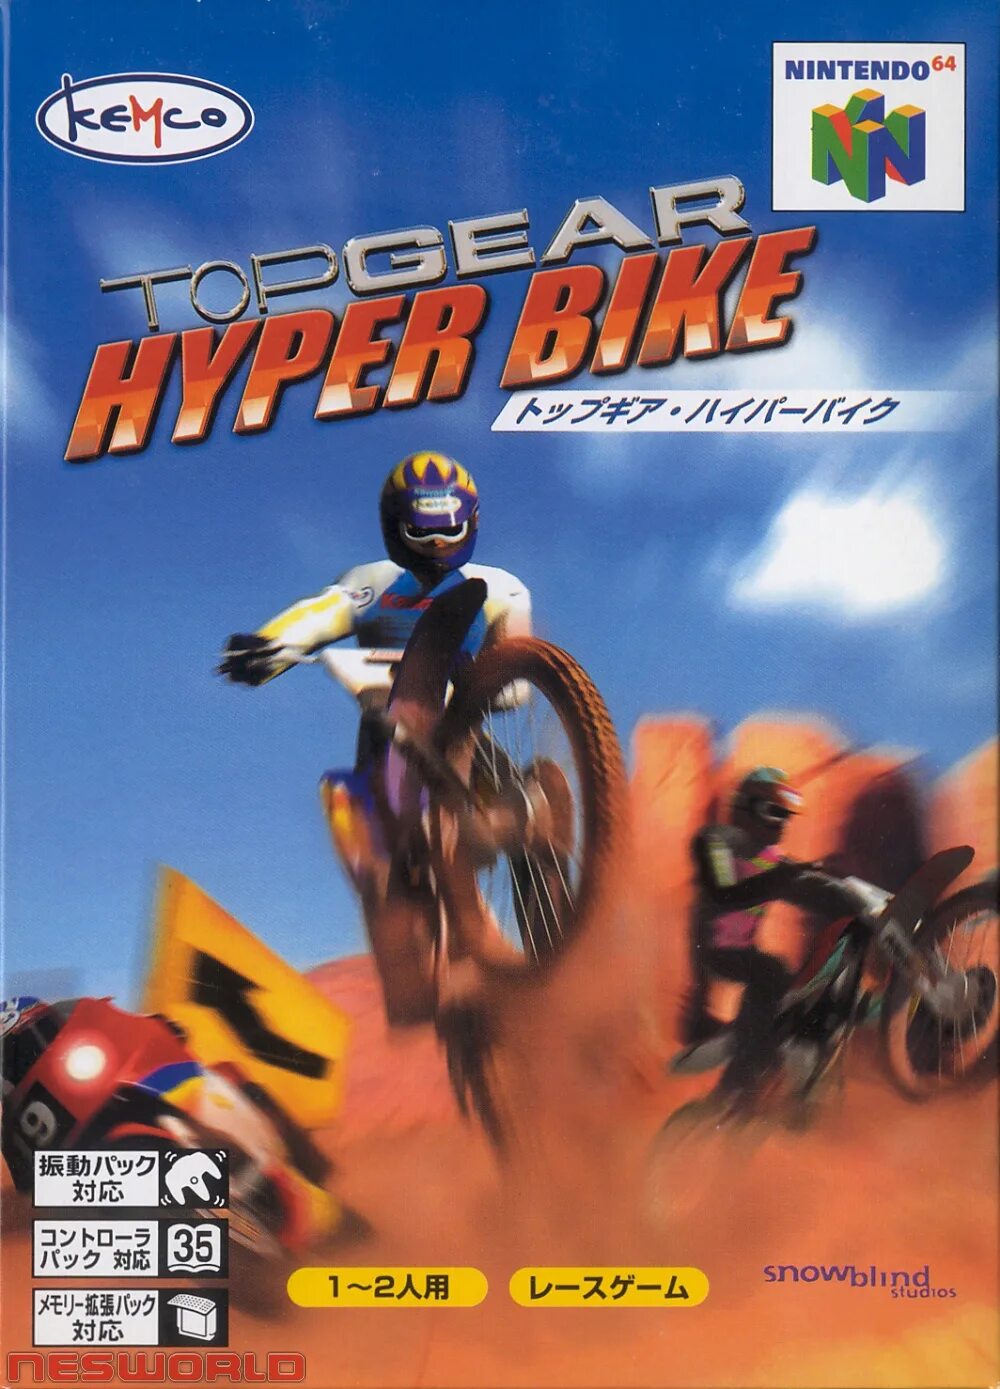 Top Gear Hyper Bike Turbo Nintendo 64. Top Gear Overdrive Nintendo 64. Нинтендо 64 игры. Nintendo 64 roms